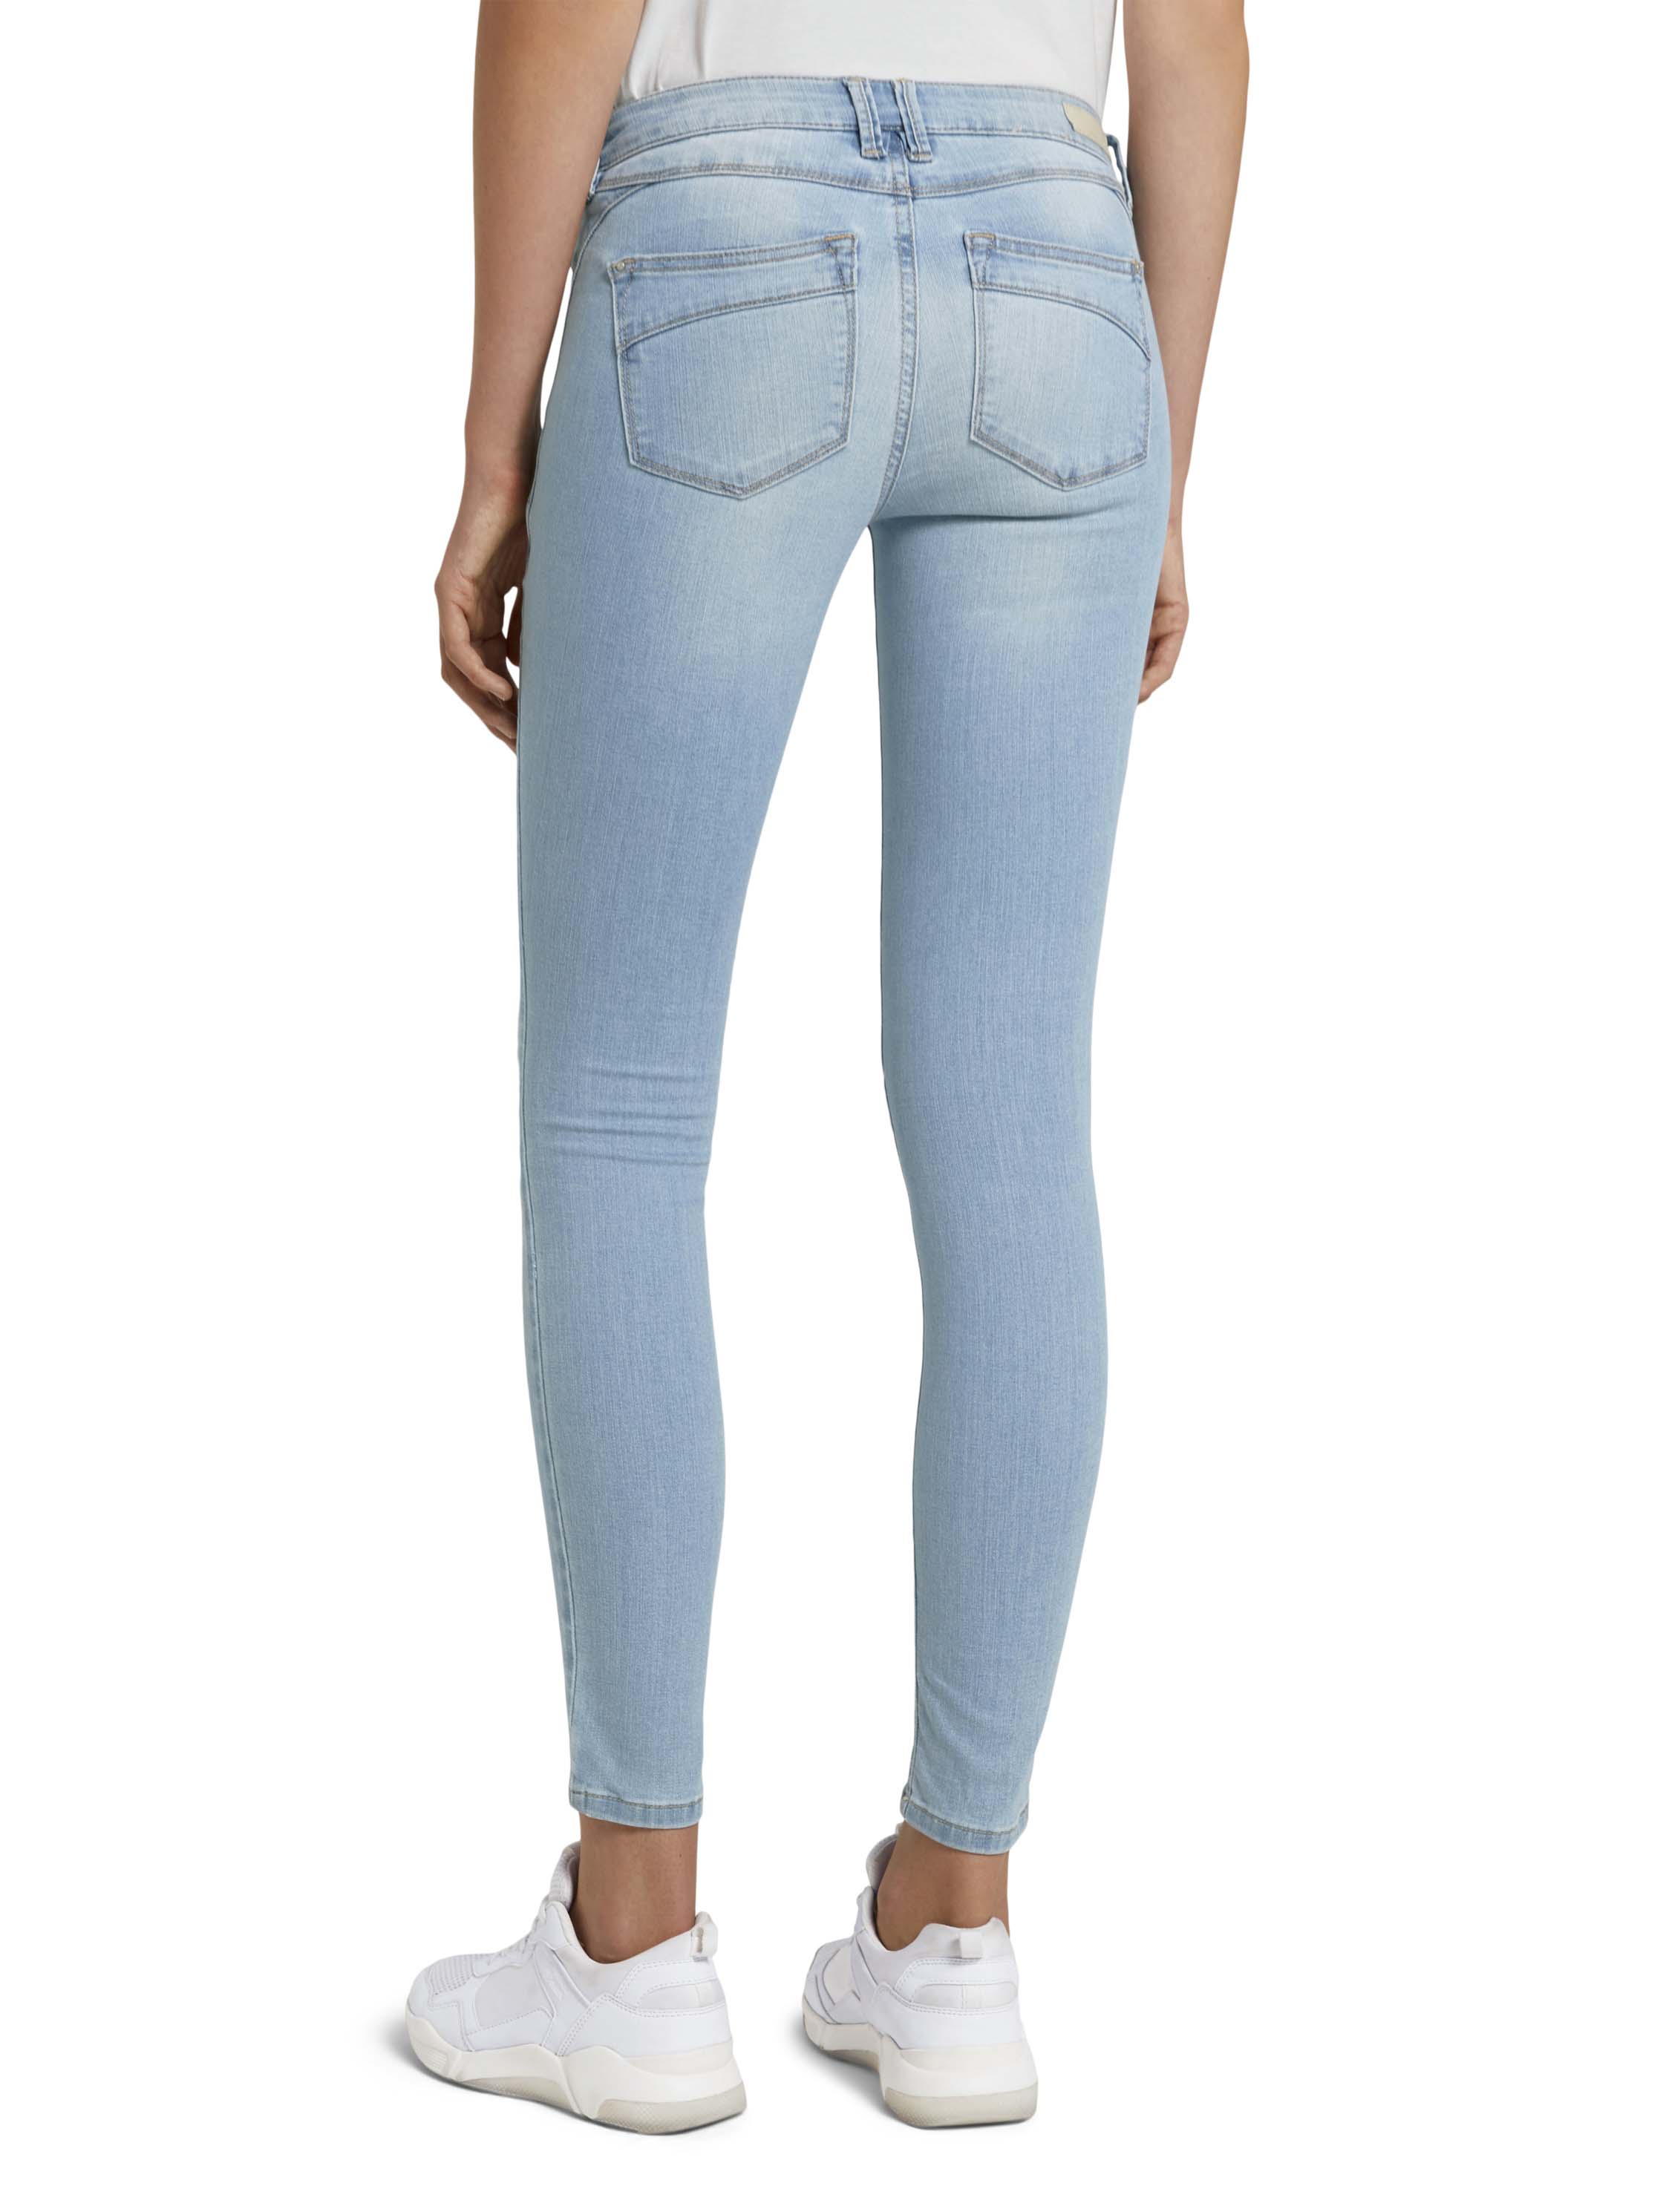 Womens Bootcut Denim Jeans Alexa Tom Tailor Size 26 32 | eBay